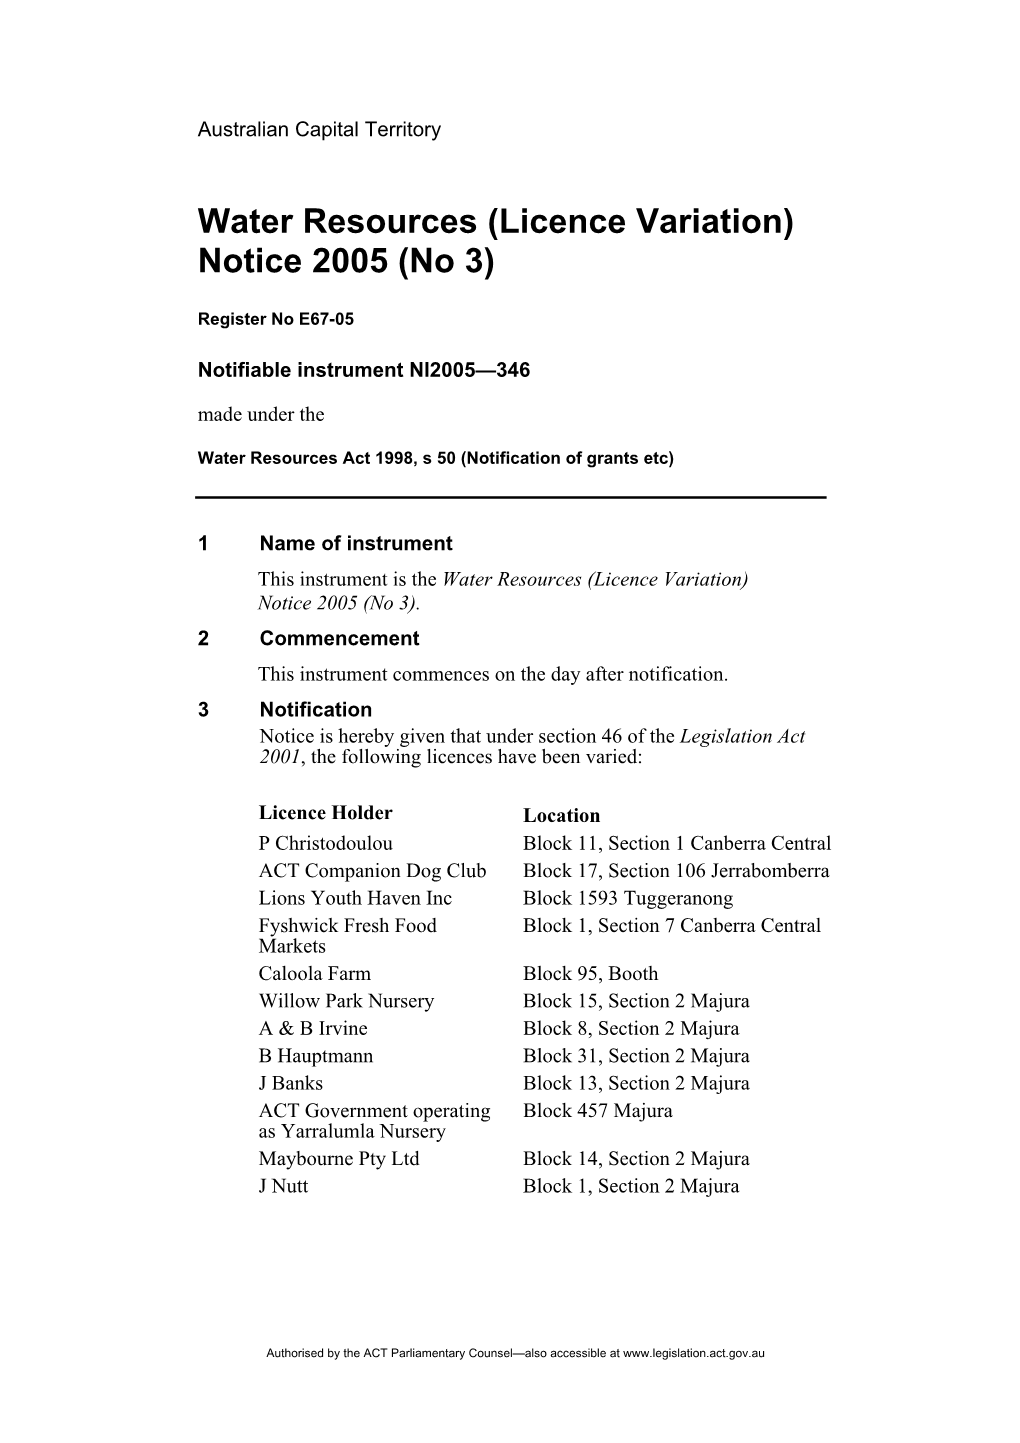 Water Resources (Licence Variation) Notice 2005 (No 3)